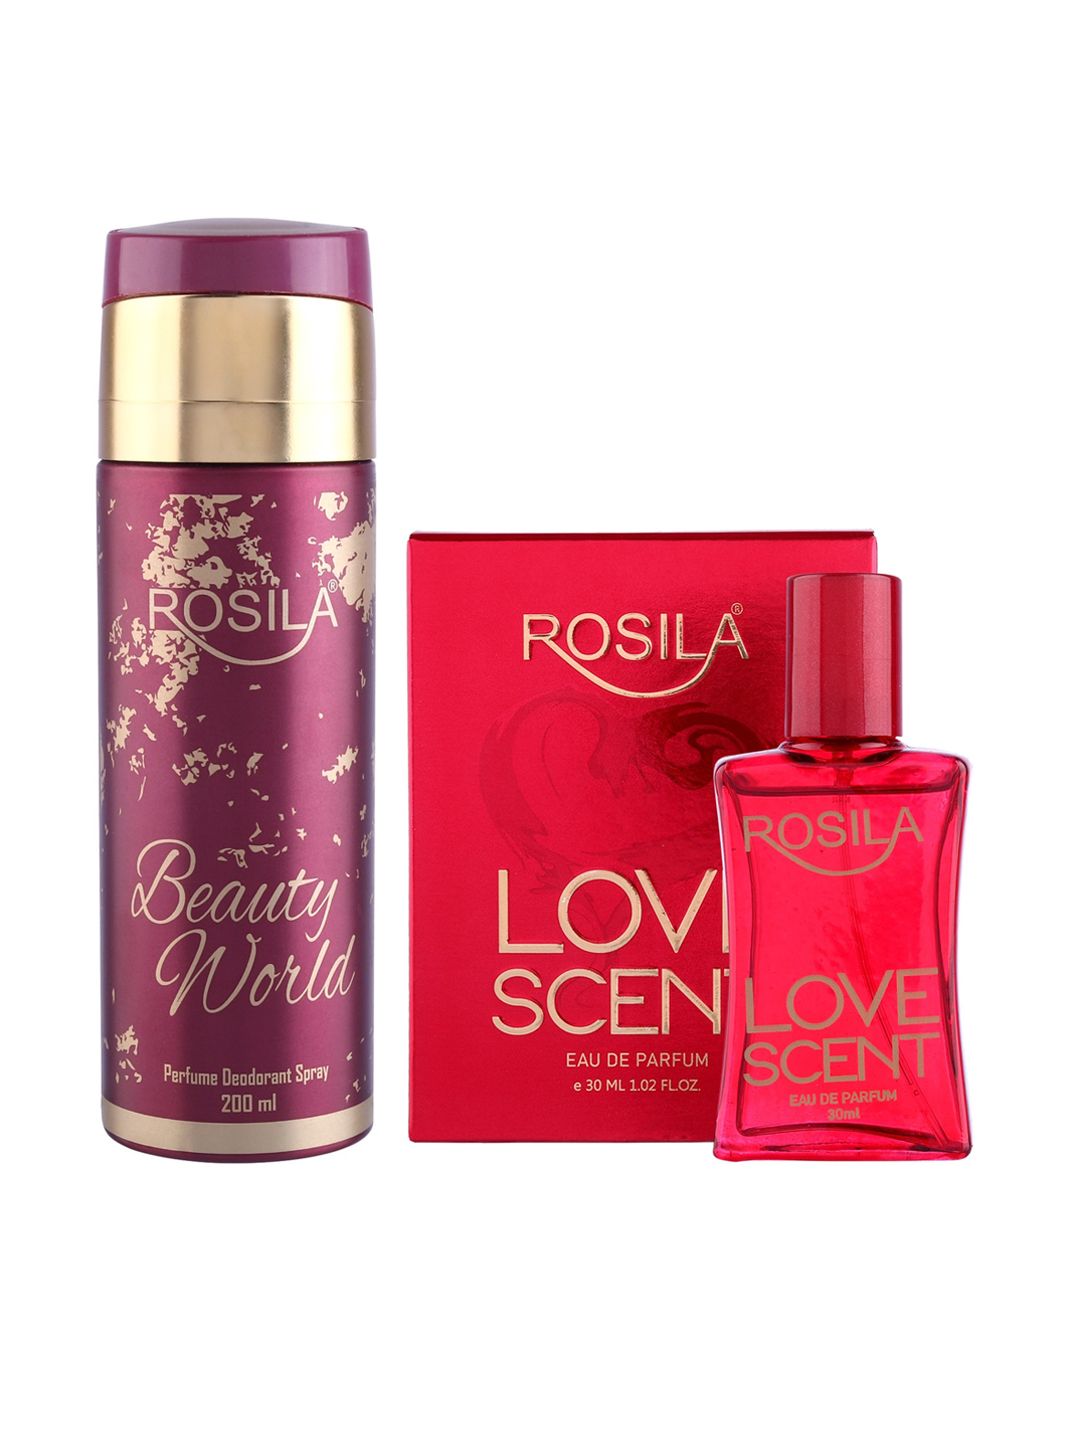 ROSILA Set Of 2 Perfumes Price in India